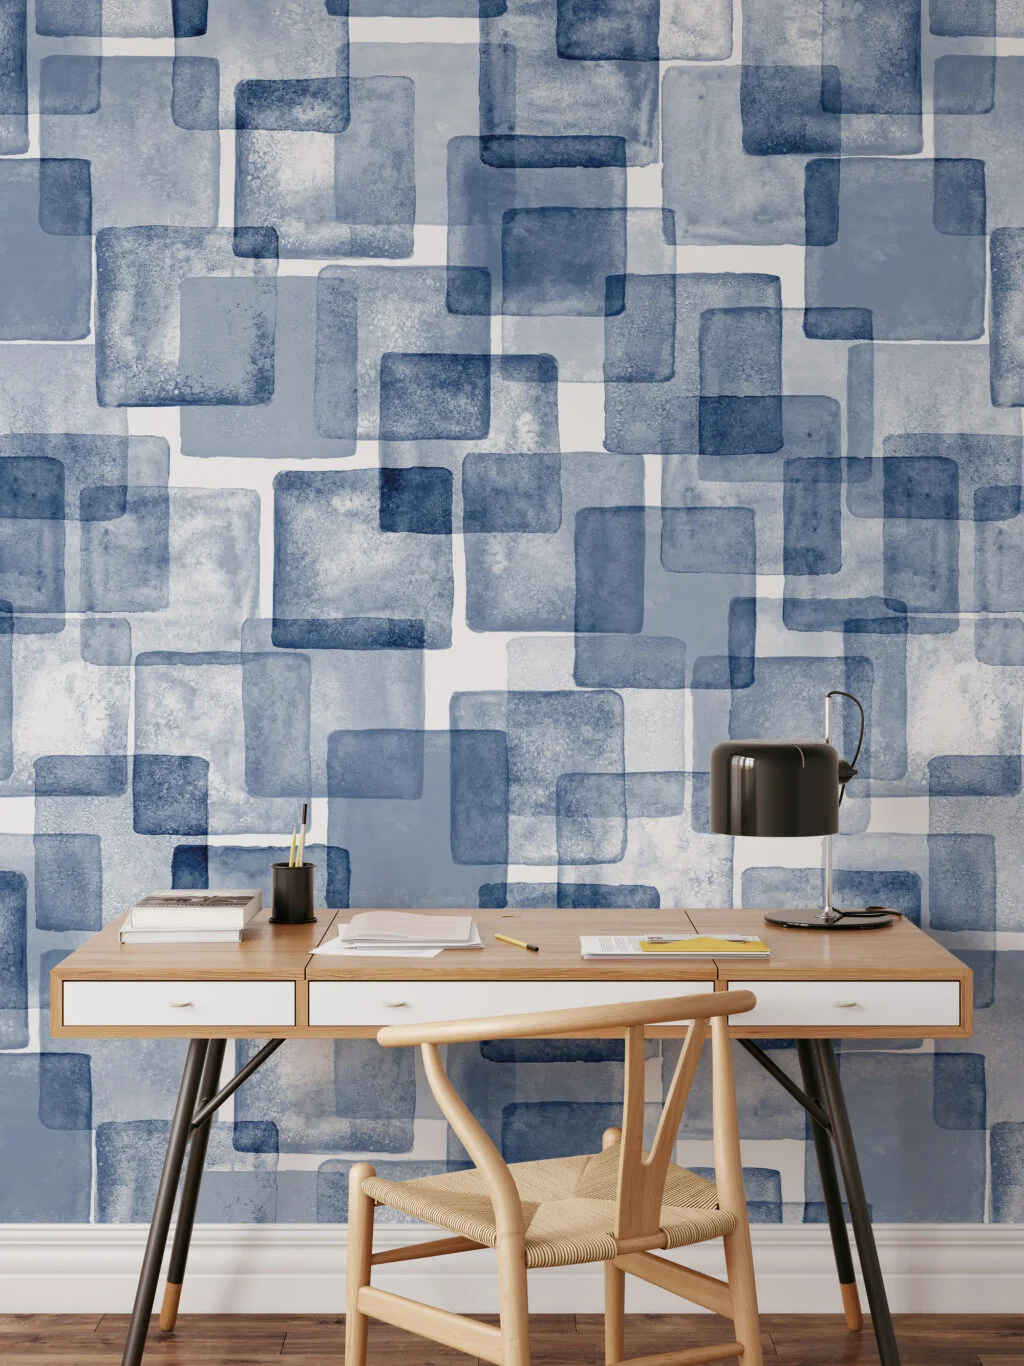 Watercolor Style Blue Squares Geometric Illustration Wallpaper, Artistic Cubist Dreams Peel & Stick Wall Mural